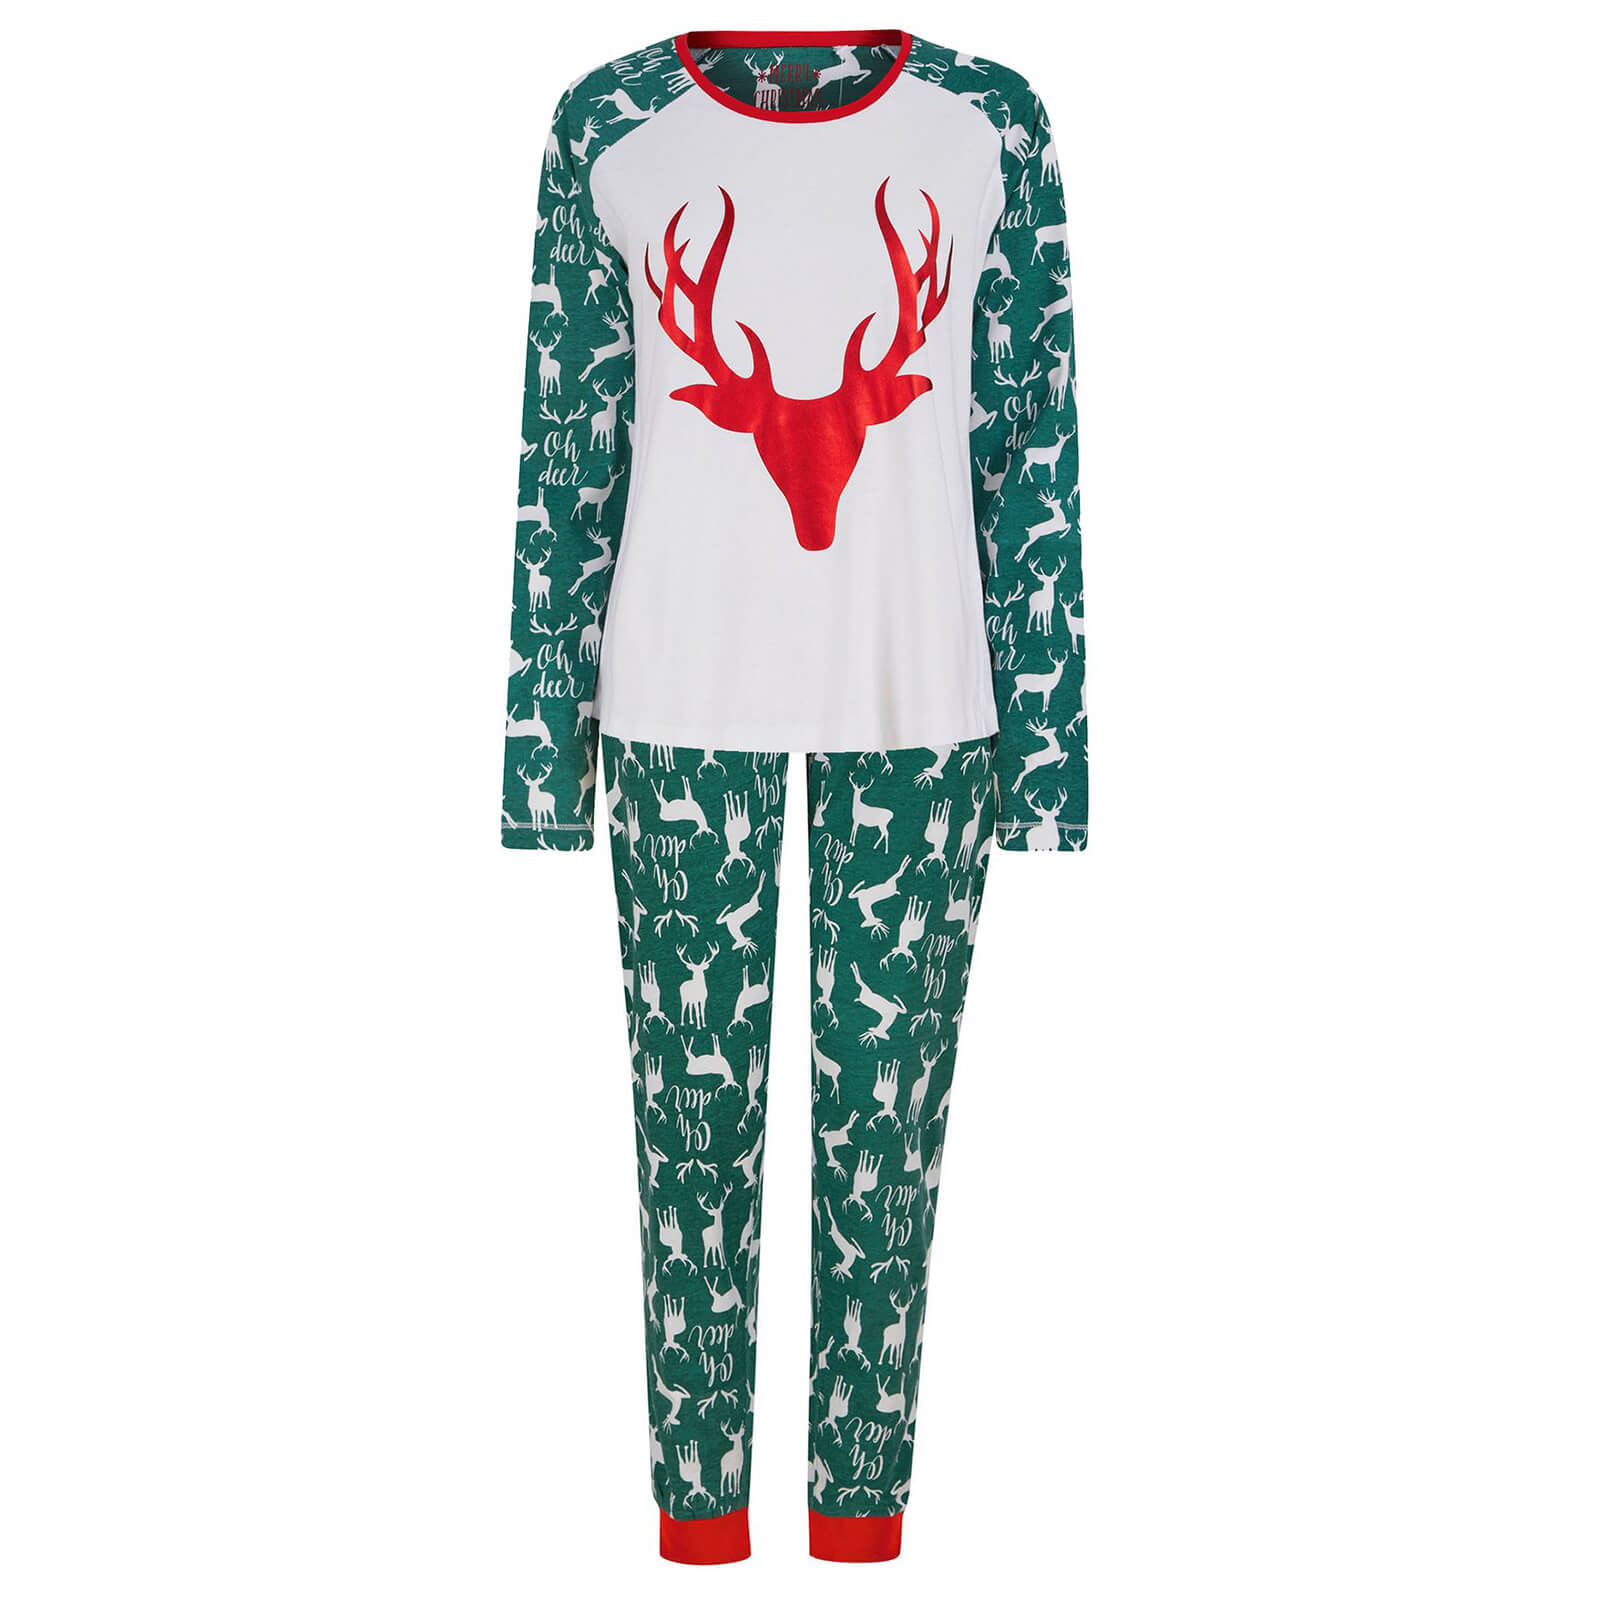 Mr Crimbo Womens Christmas Pyjama Set Stag Head Motif - MrCrimbo.co.uk -SRG3Q17470_A - Green -Green